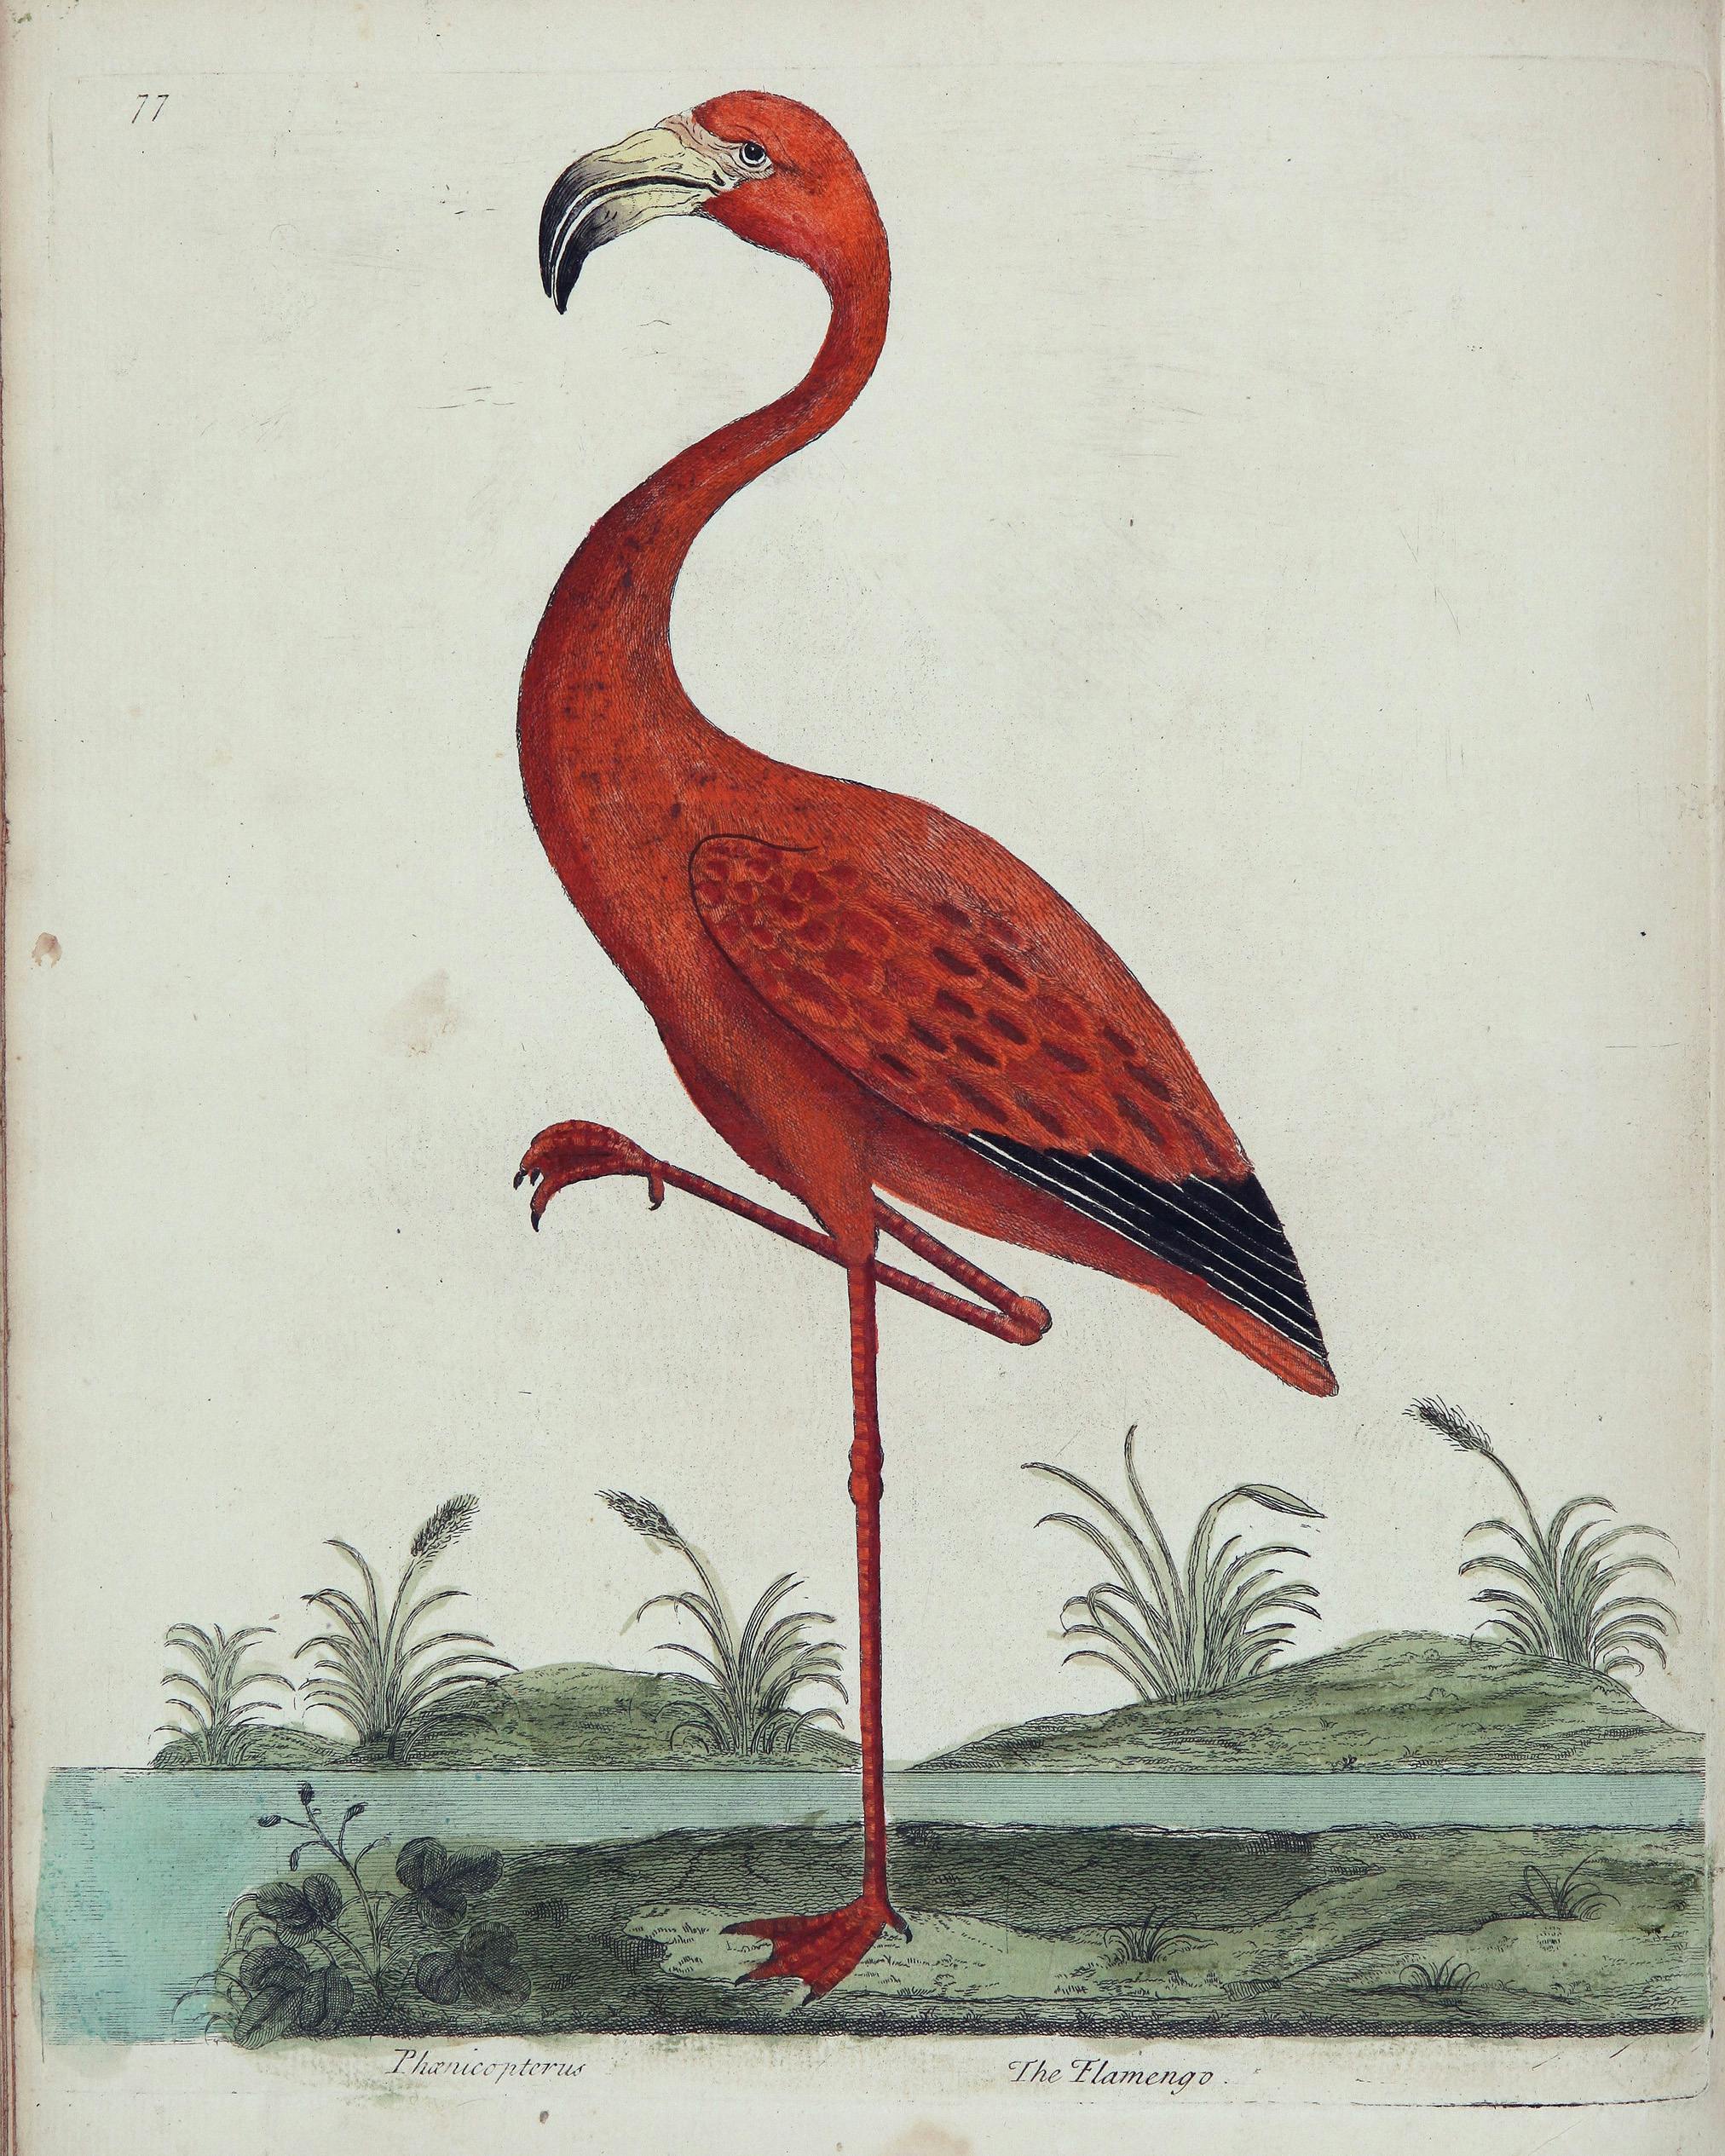 Eleazar Albin, A natural history of birds, 1731-1738